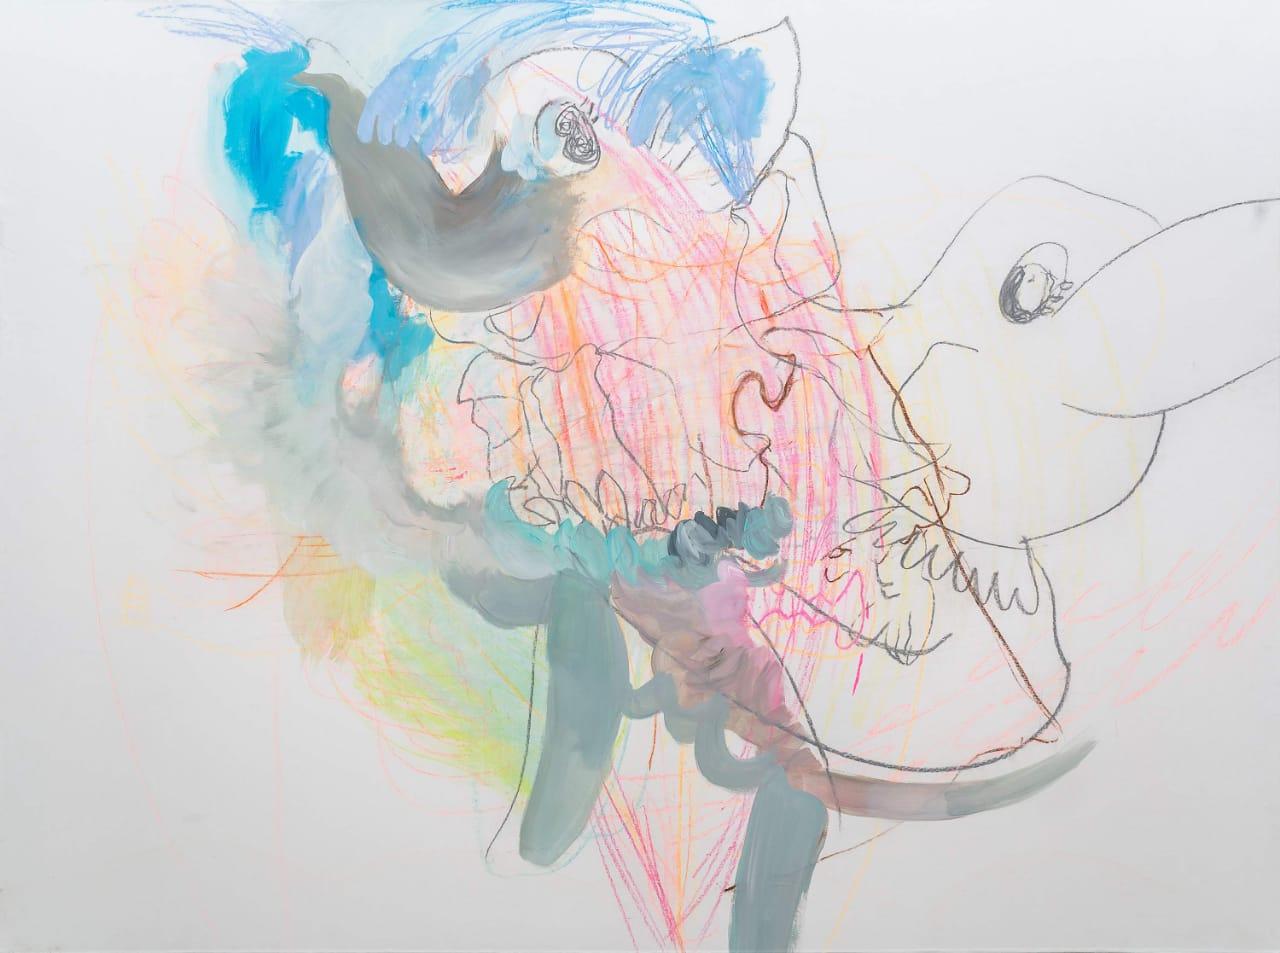 Abrazo de Elefante - Painting by Valeria Vilar